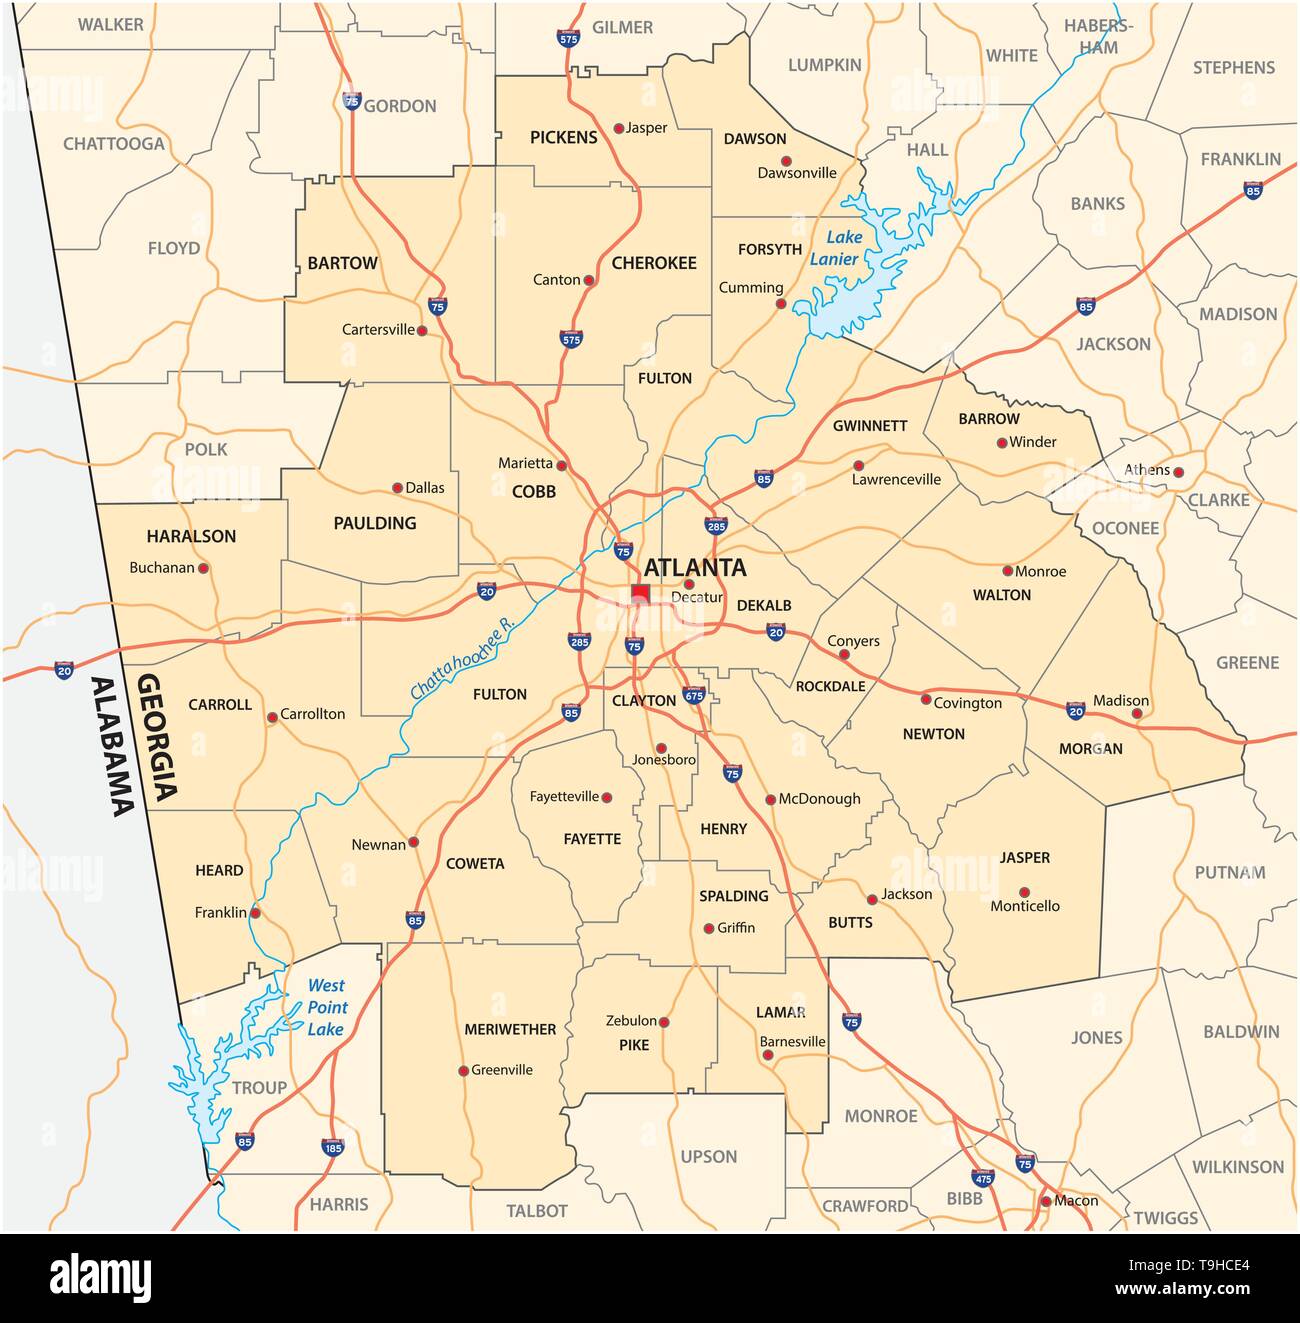 administrative and political road map of the Atlanta metropolitan area georgia Stock Vector